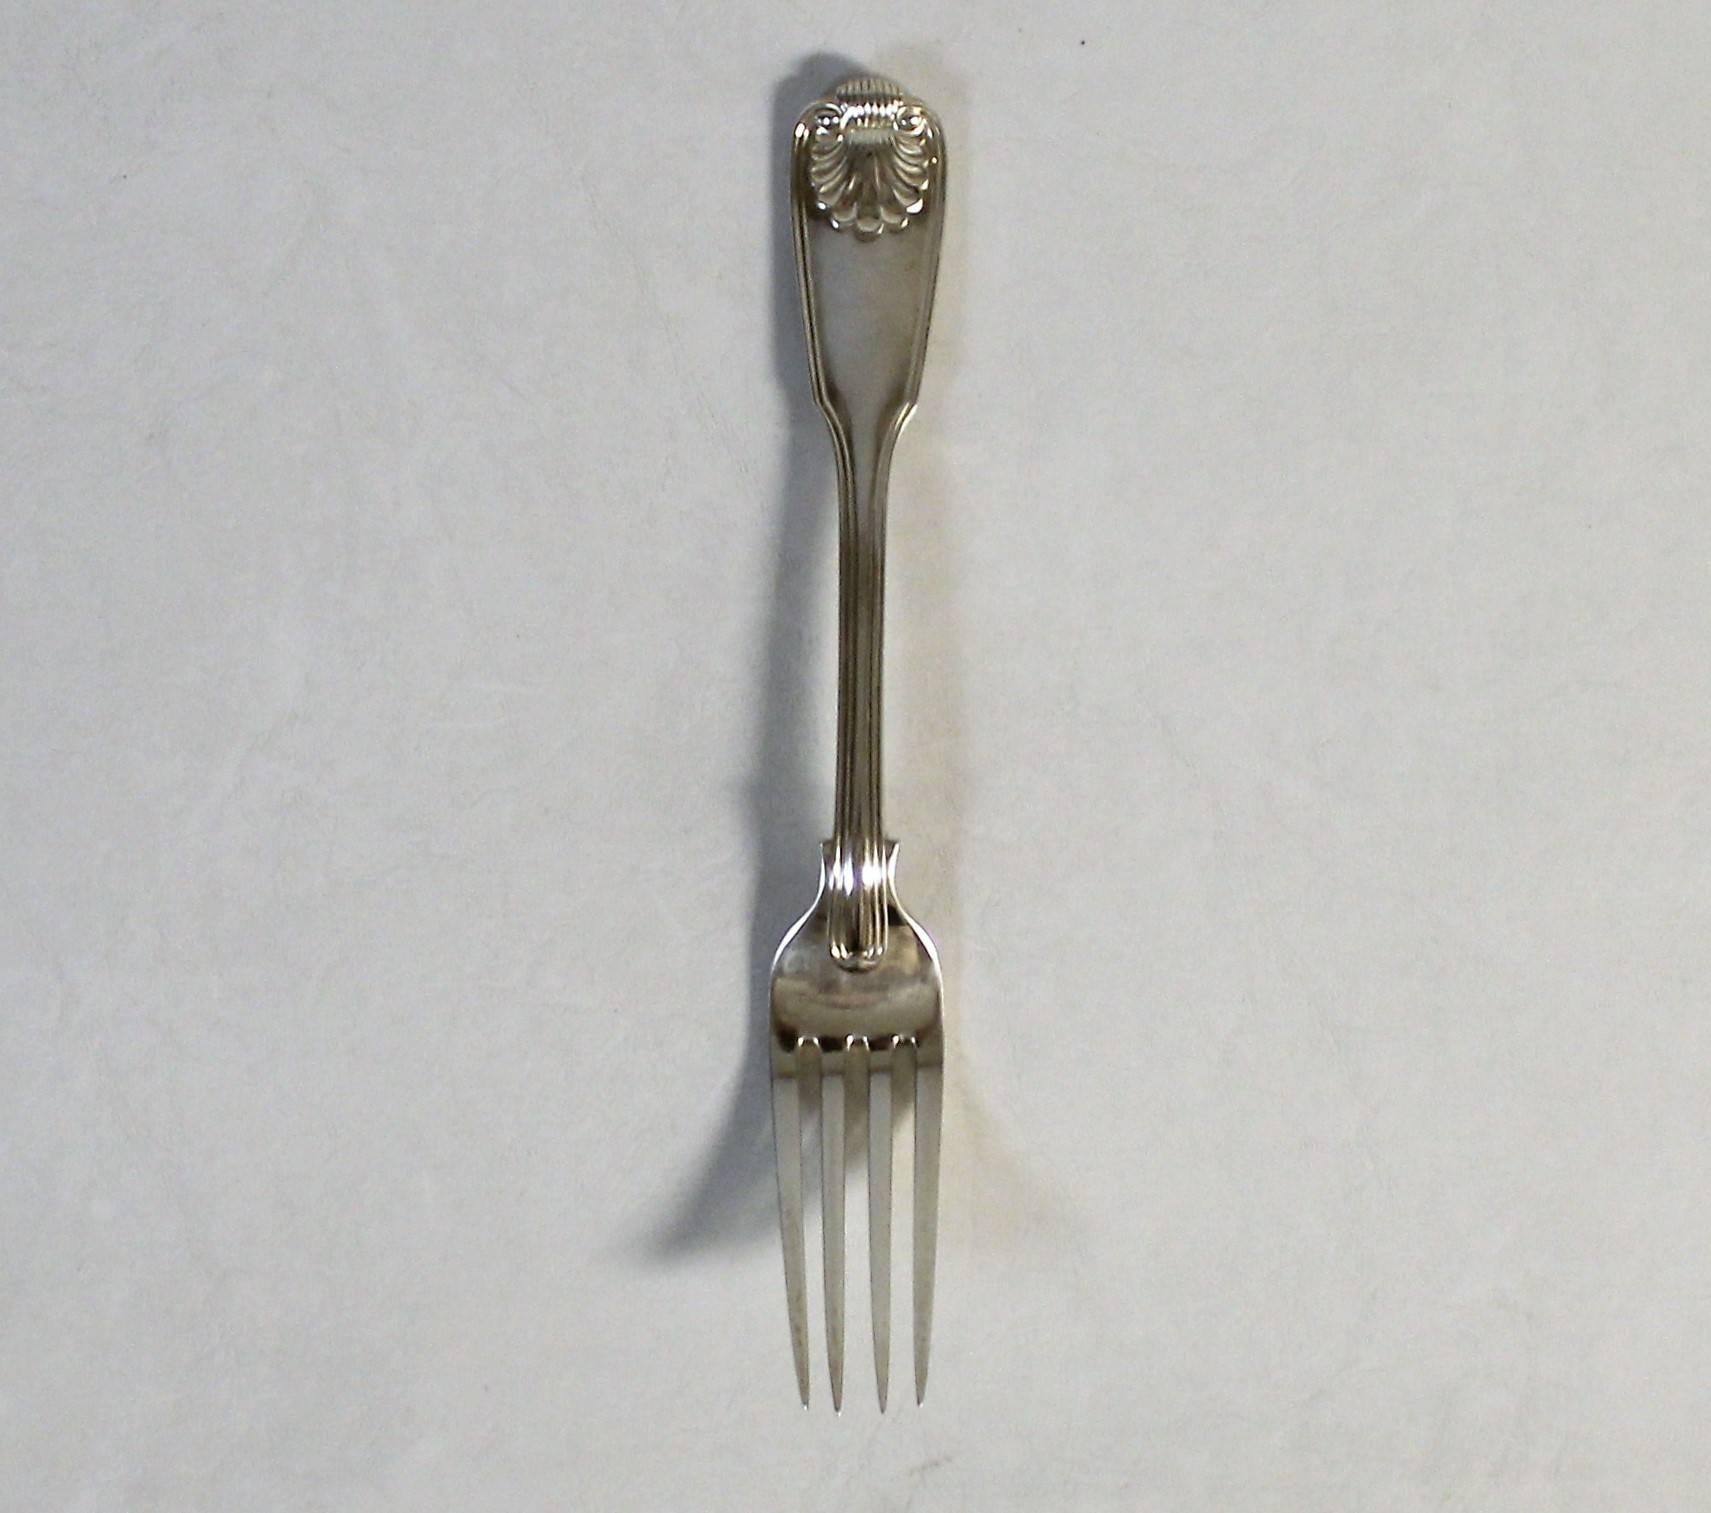 Twelve English 19th century Chawner & Co - George William Adams sterling silver forks, 1858, London hallmark
Weight: 1212 grams.